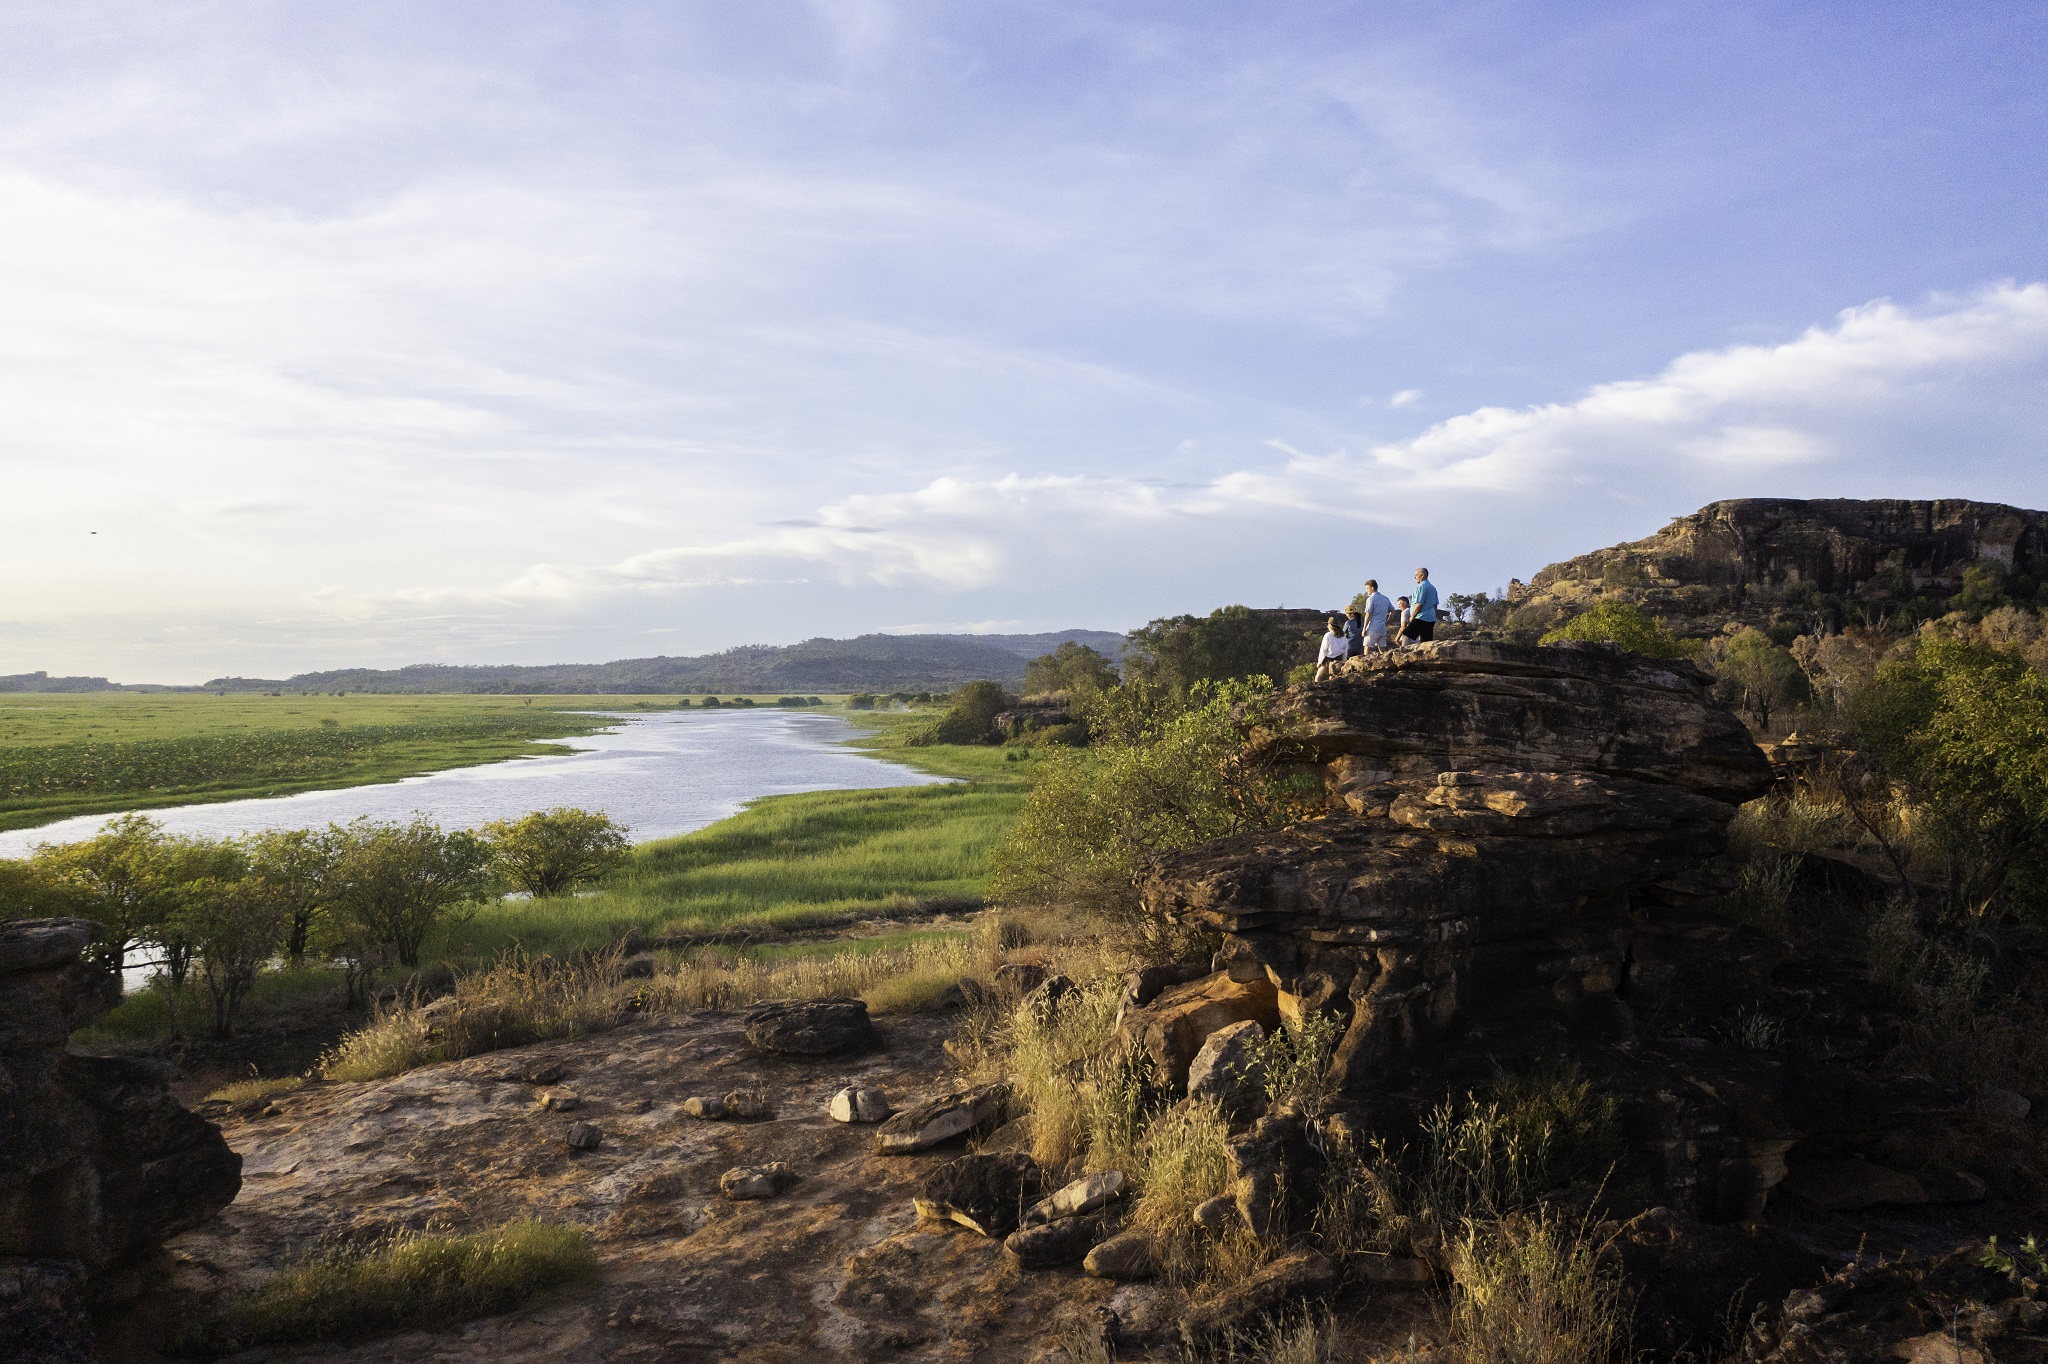 Landscape, guide and customers on Kakadu Cultural Tours, © Tourism Australia